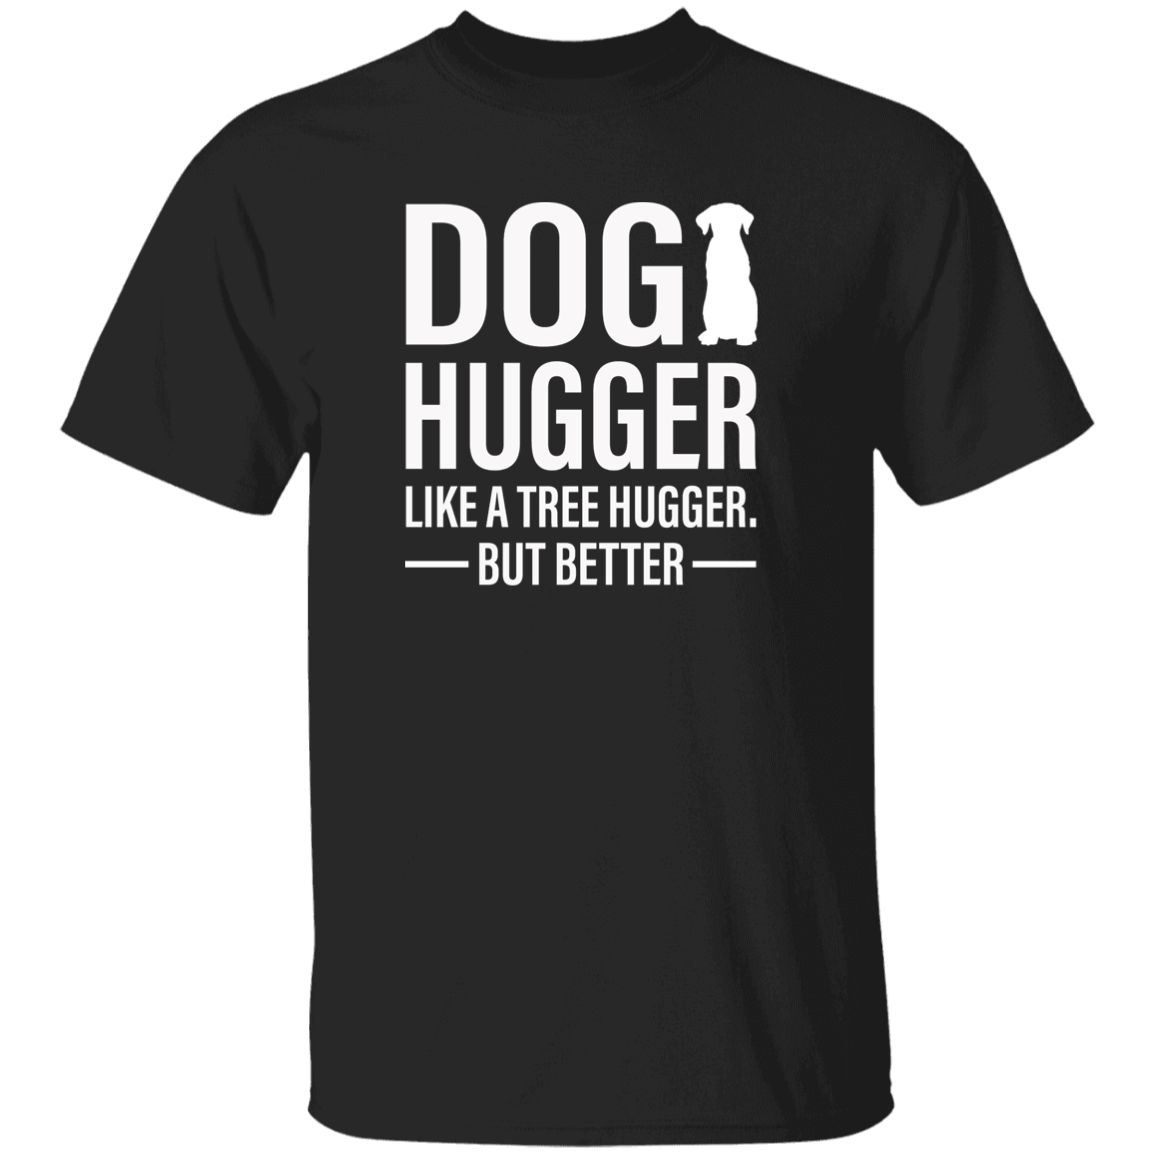 Dog Hugger - T Shirt.